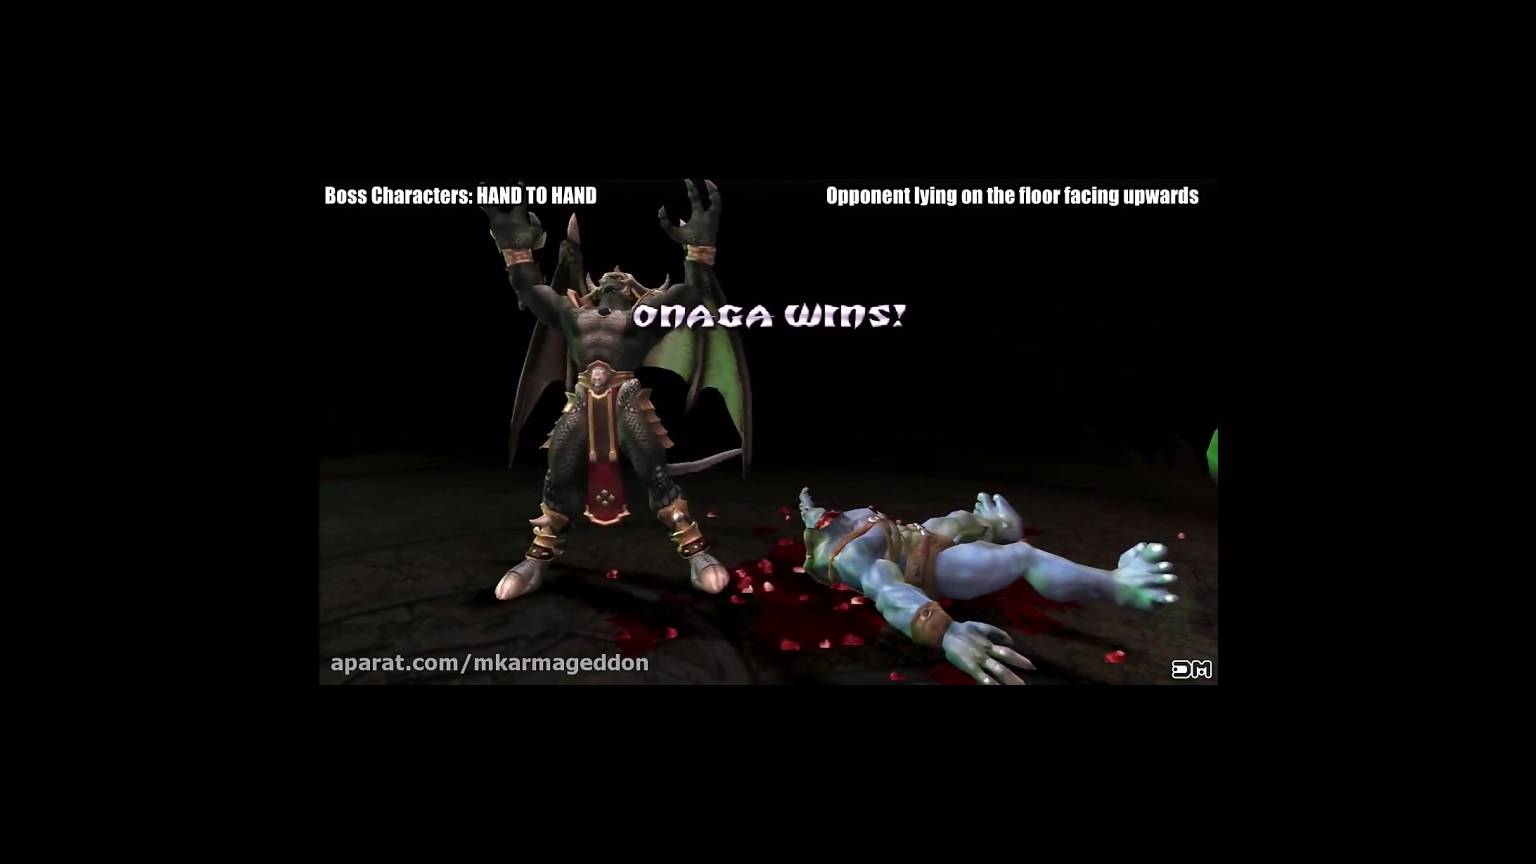 Mortal Kombat Armageddon - All Death Traps PS2 Gameplay UHD (PCSX2